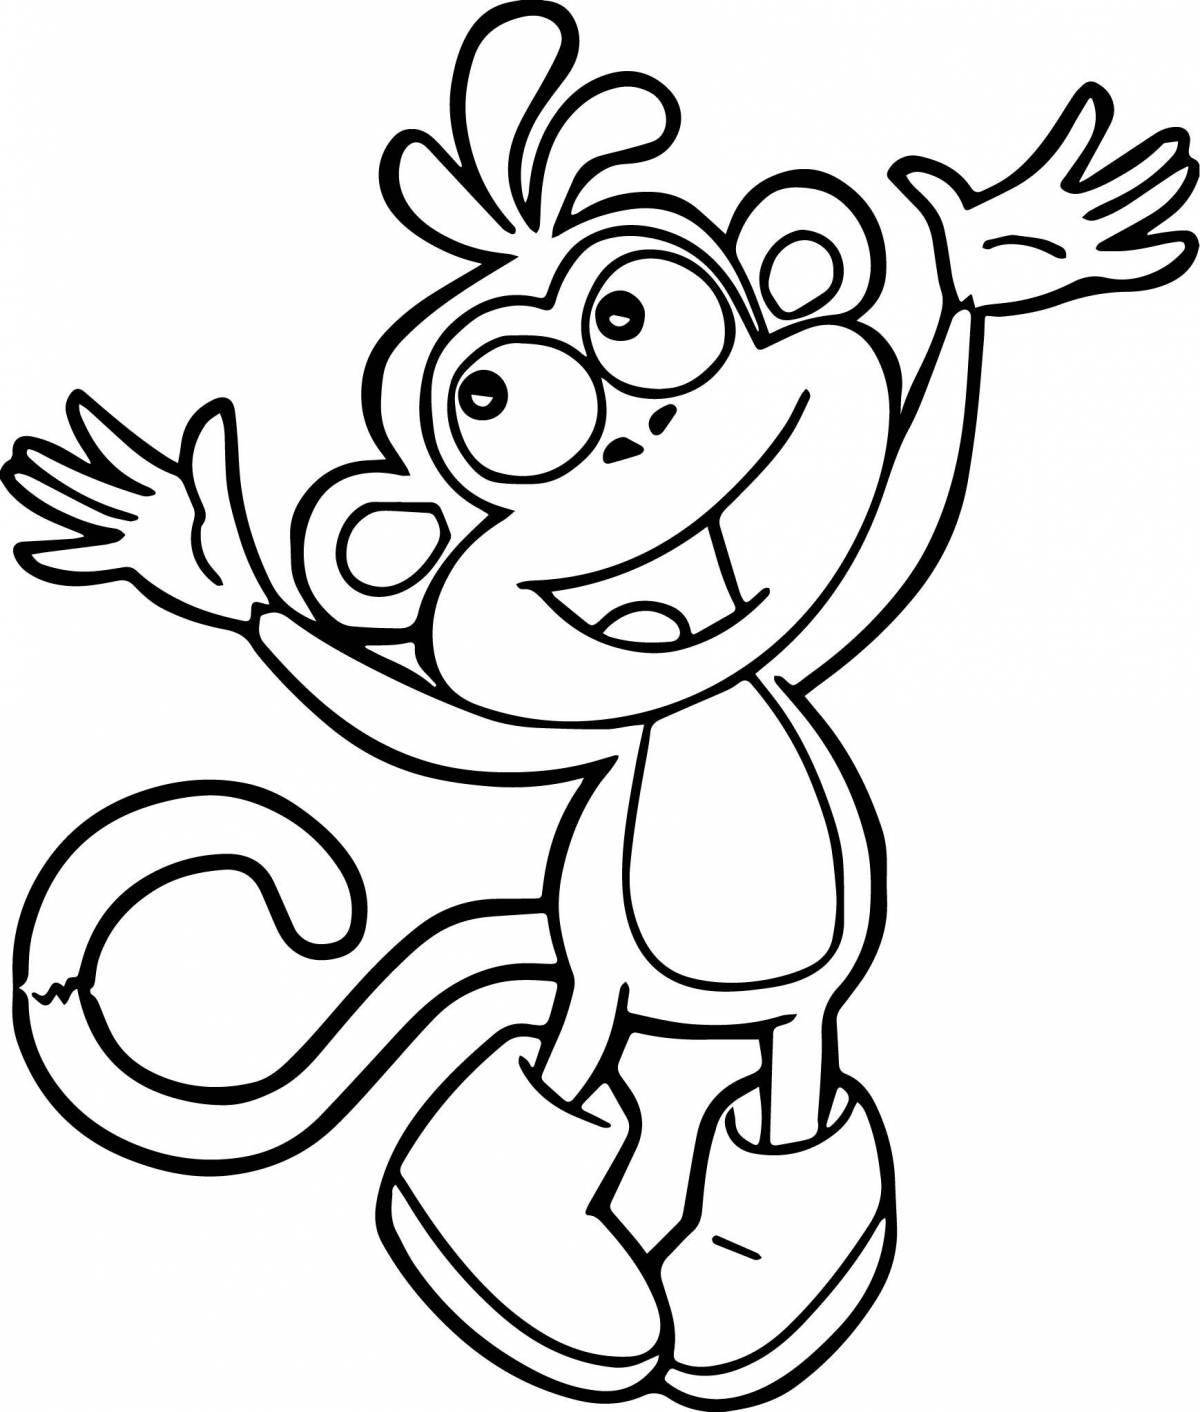 Красочная раскраска обезьяна для детей